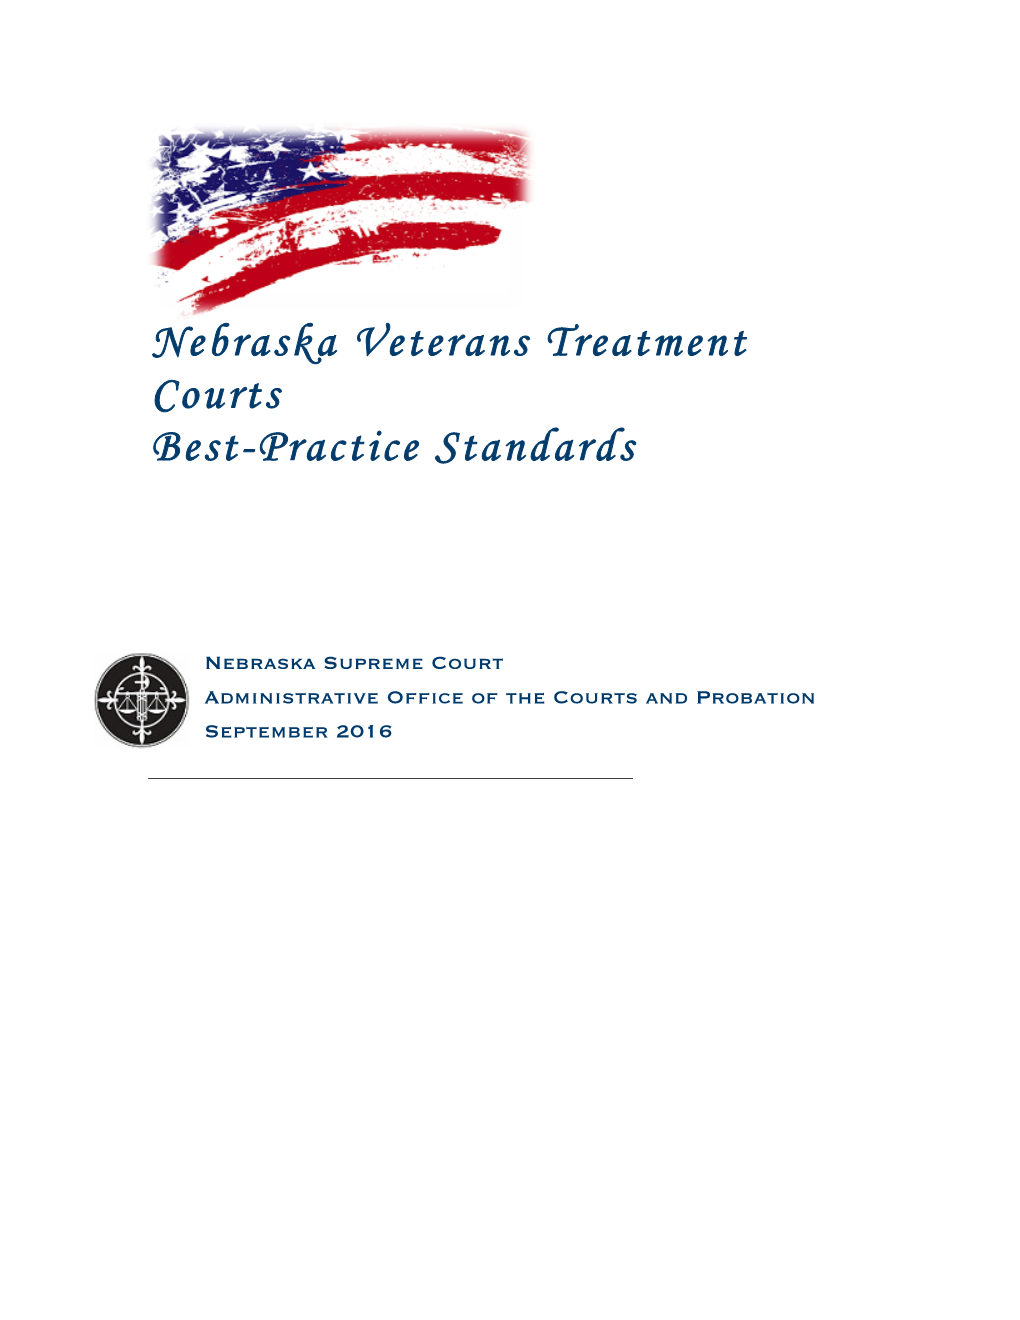 Nebraska Veterans Treatment Courts Best-Practice Standards